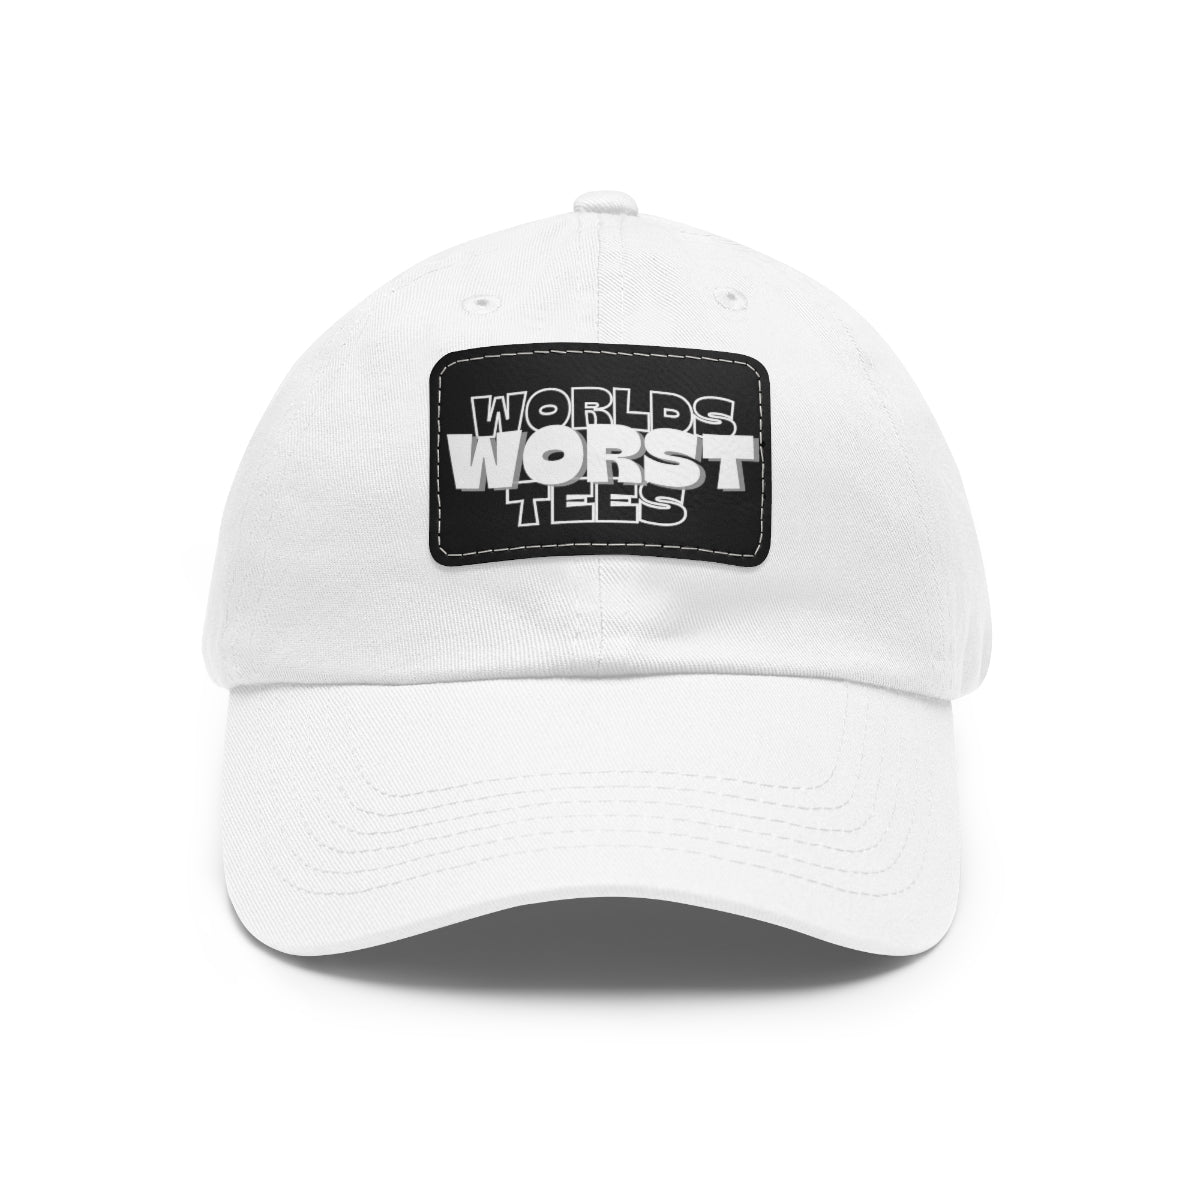 Worlds Worst Tees Hat